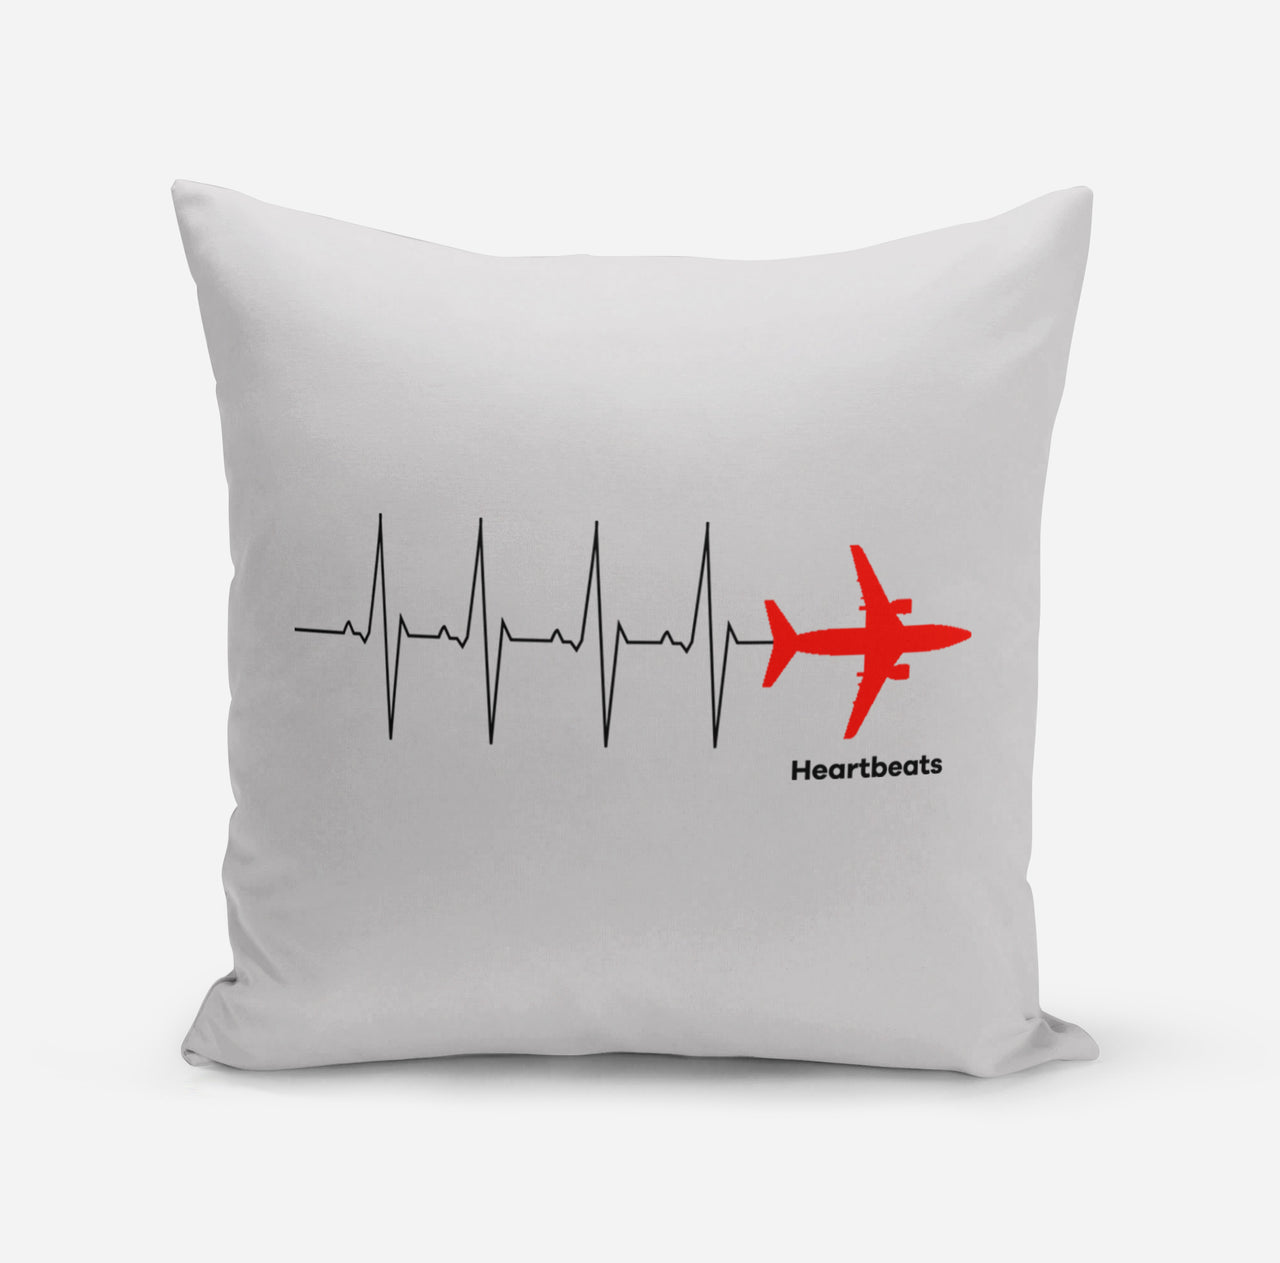 Aviation Heartbeats Designed Pillows